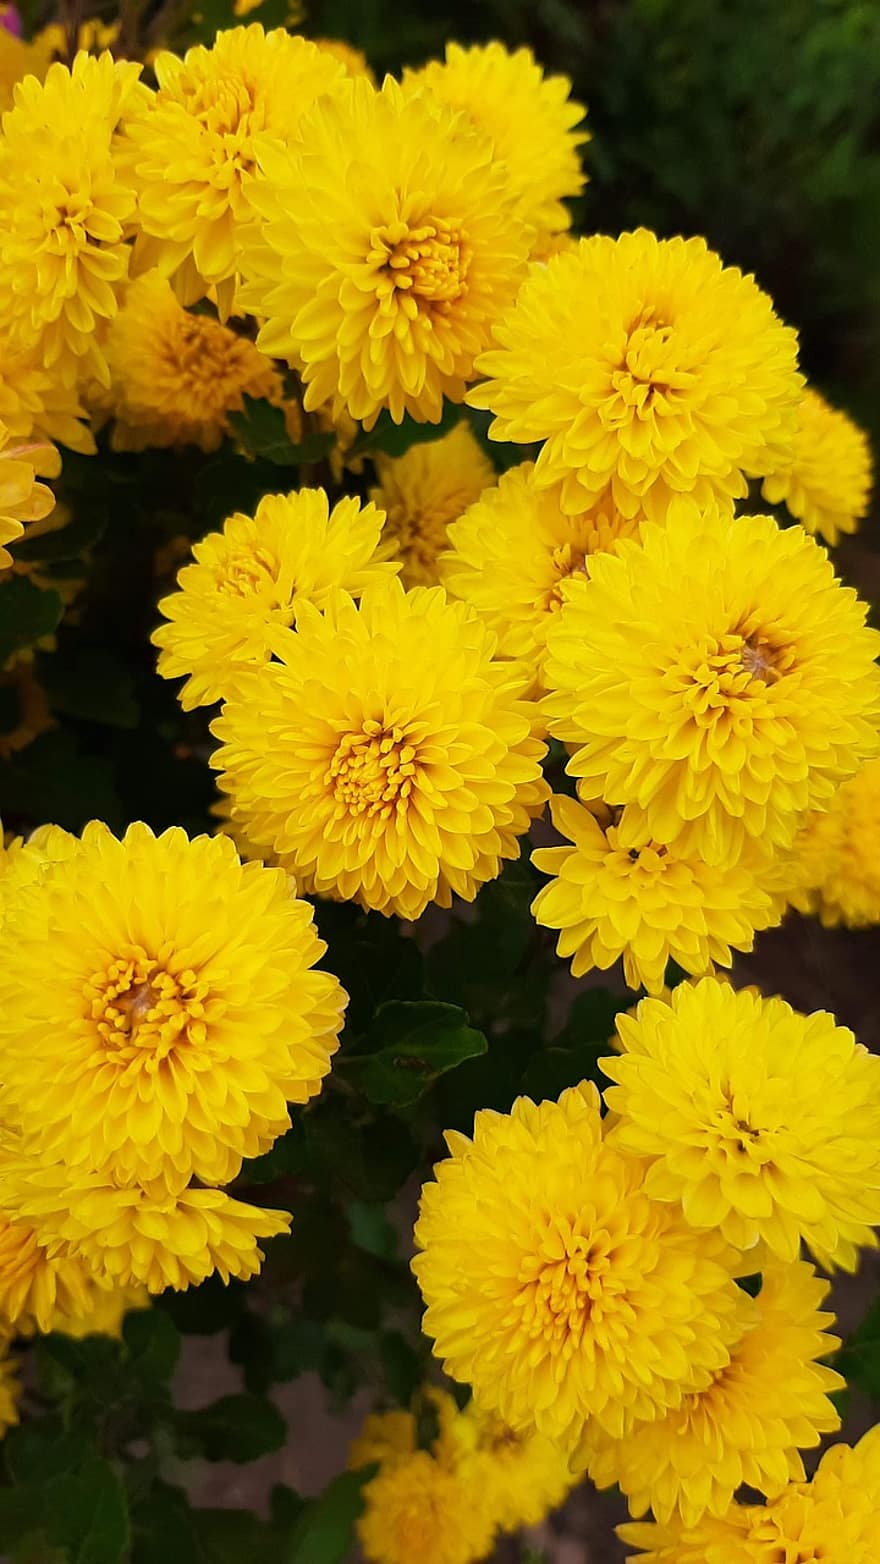 Chrysanthemum, Flowers, Plants, Yellow Flowers, Petals, Bloom, Garden, Nature, yellow, close-up, summer